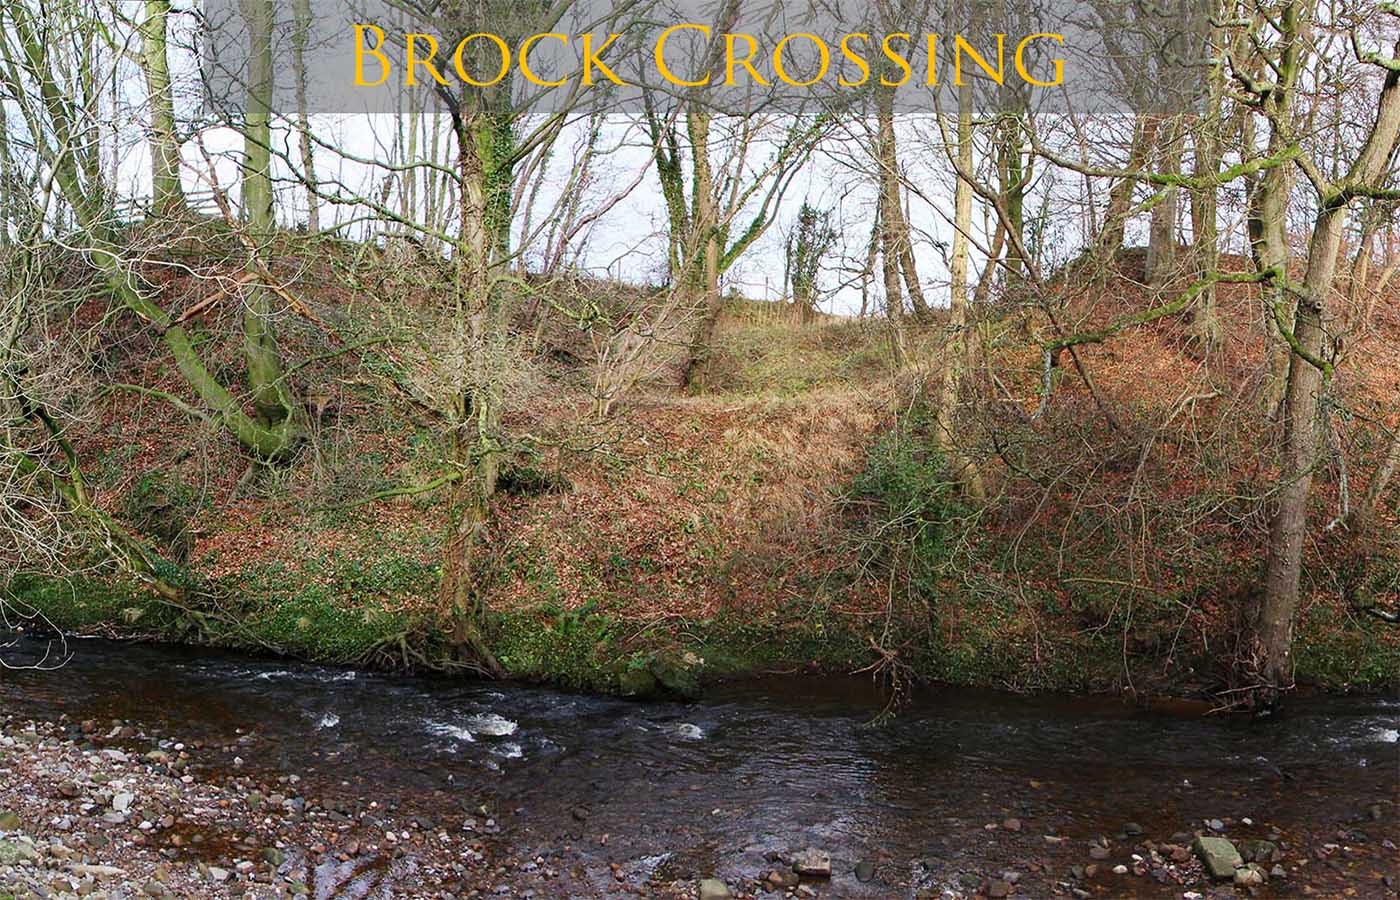 Brock crossing